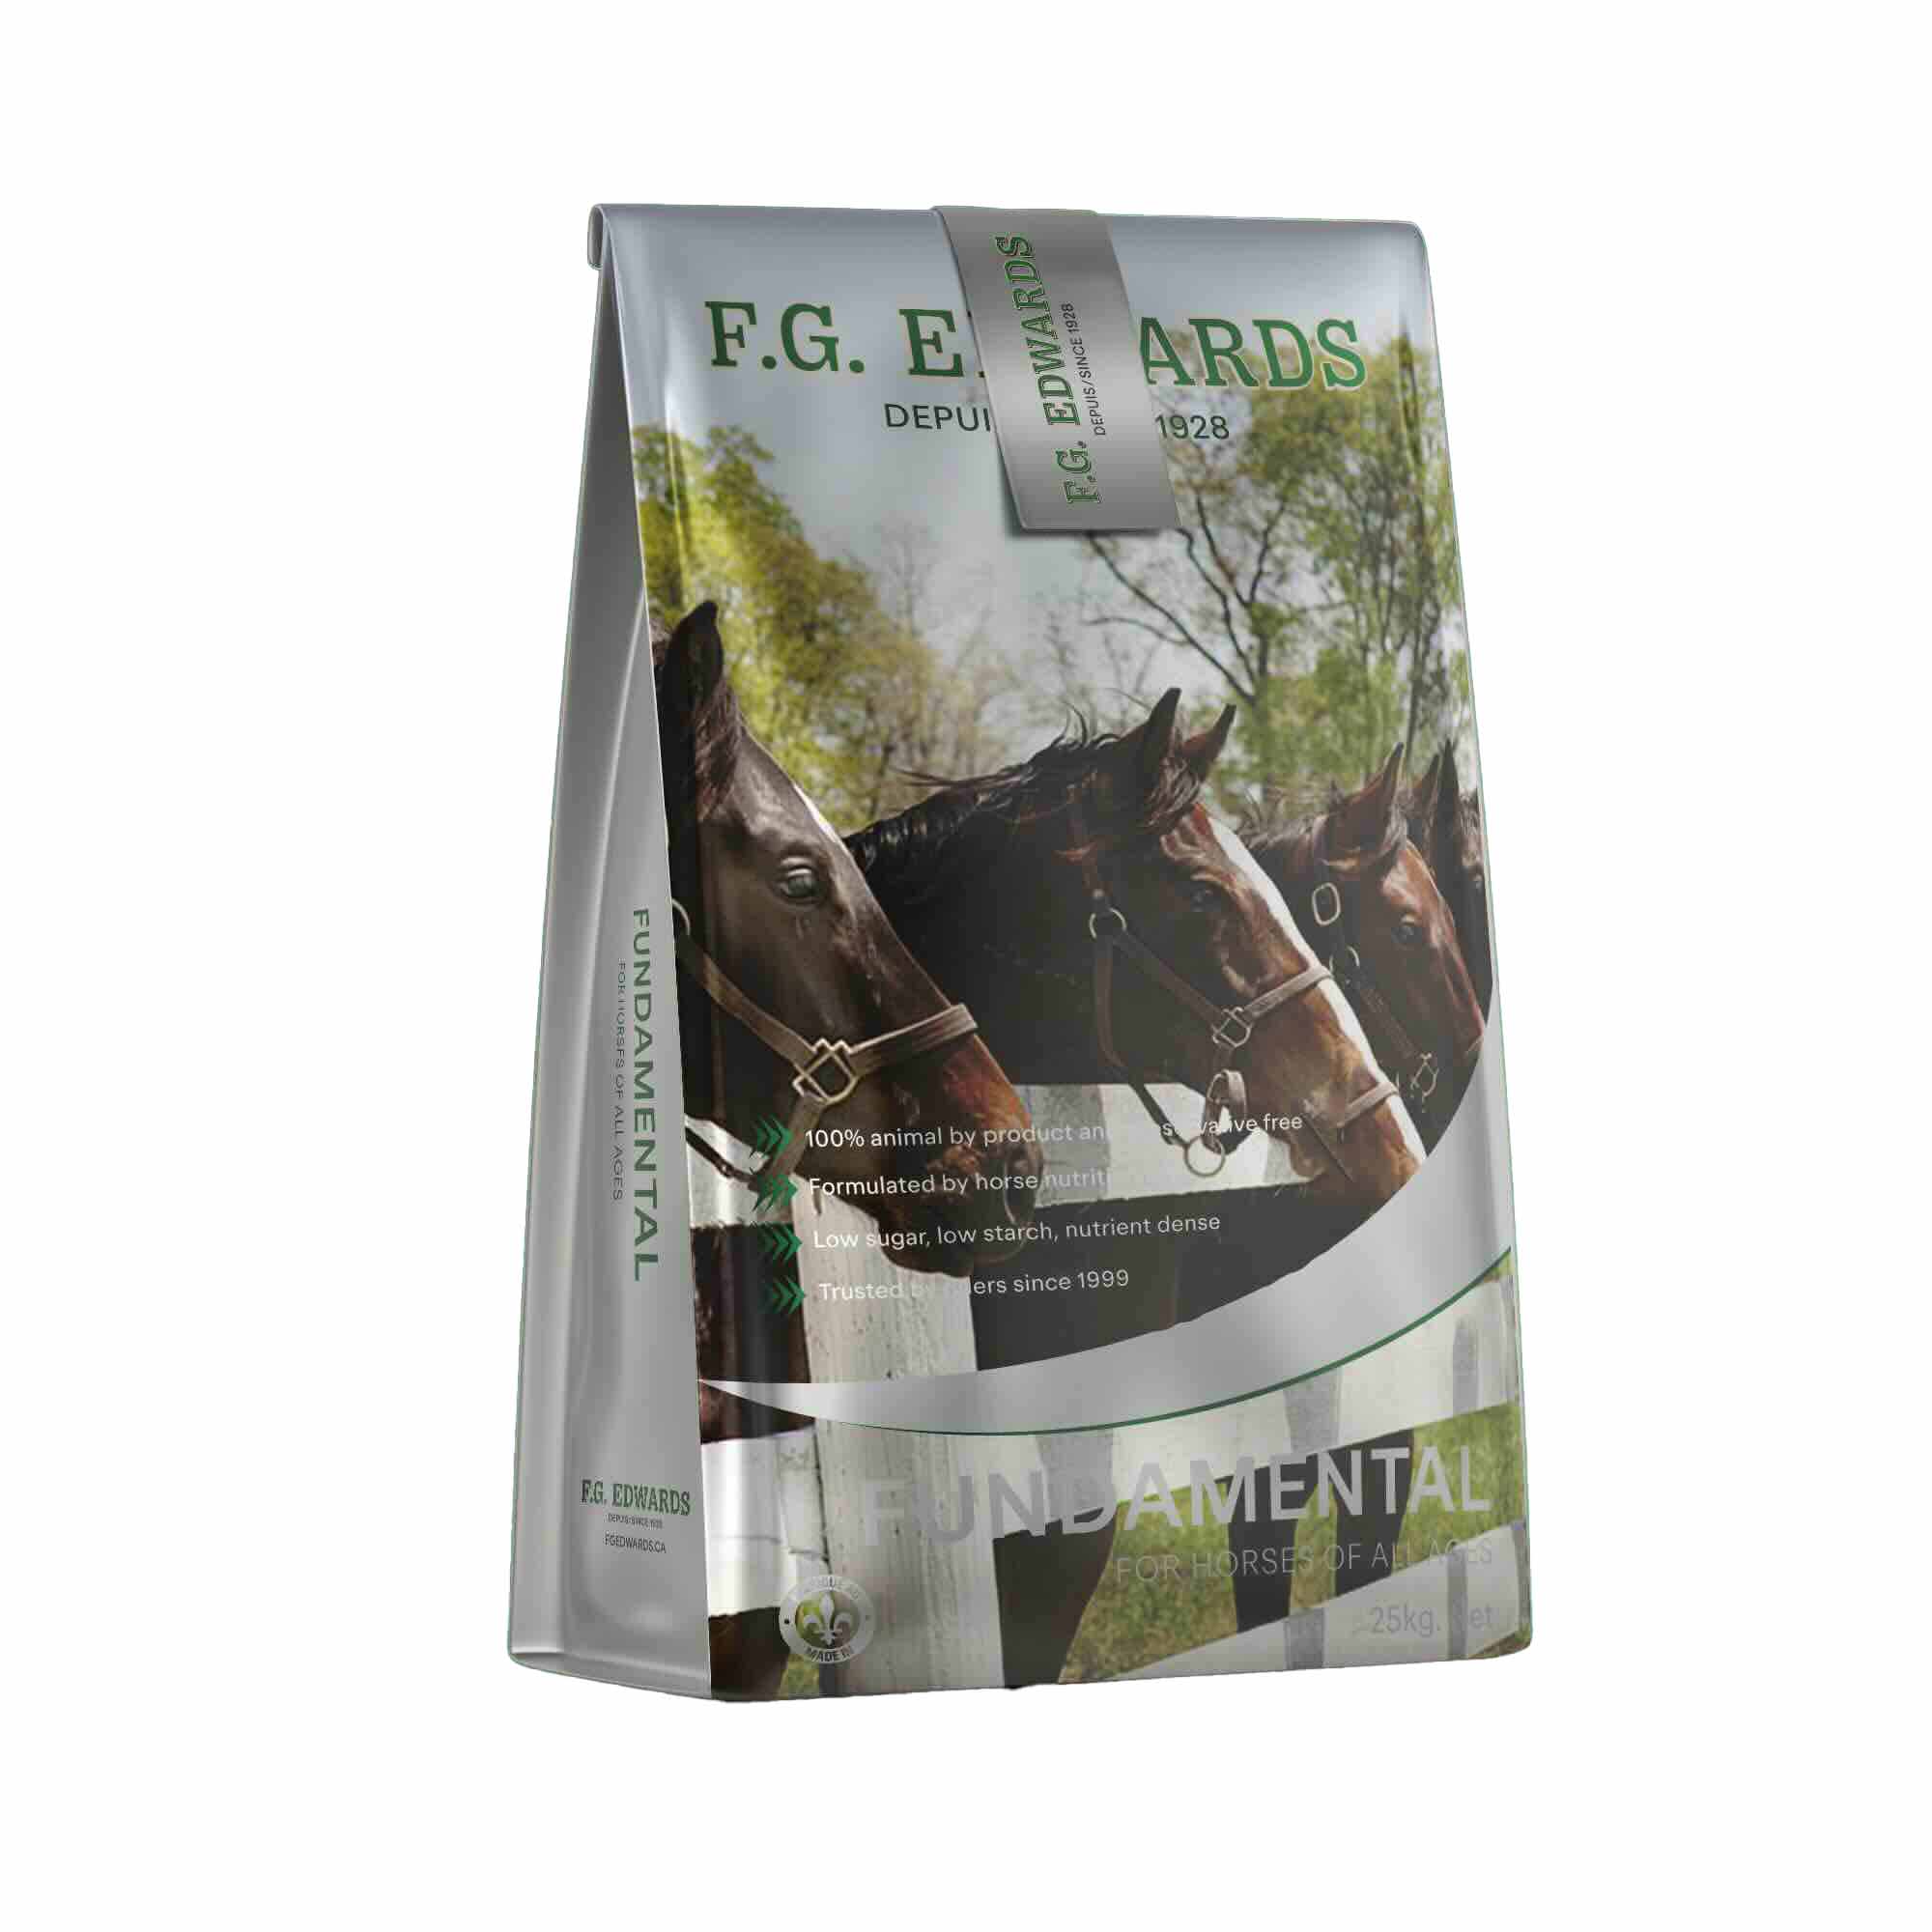 FG Edwards - Fundamental - 14% textured horse feed